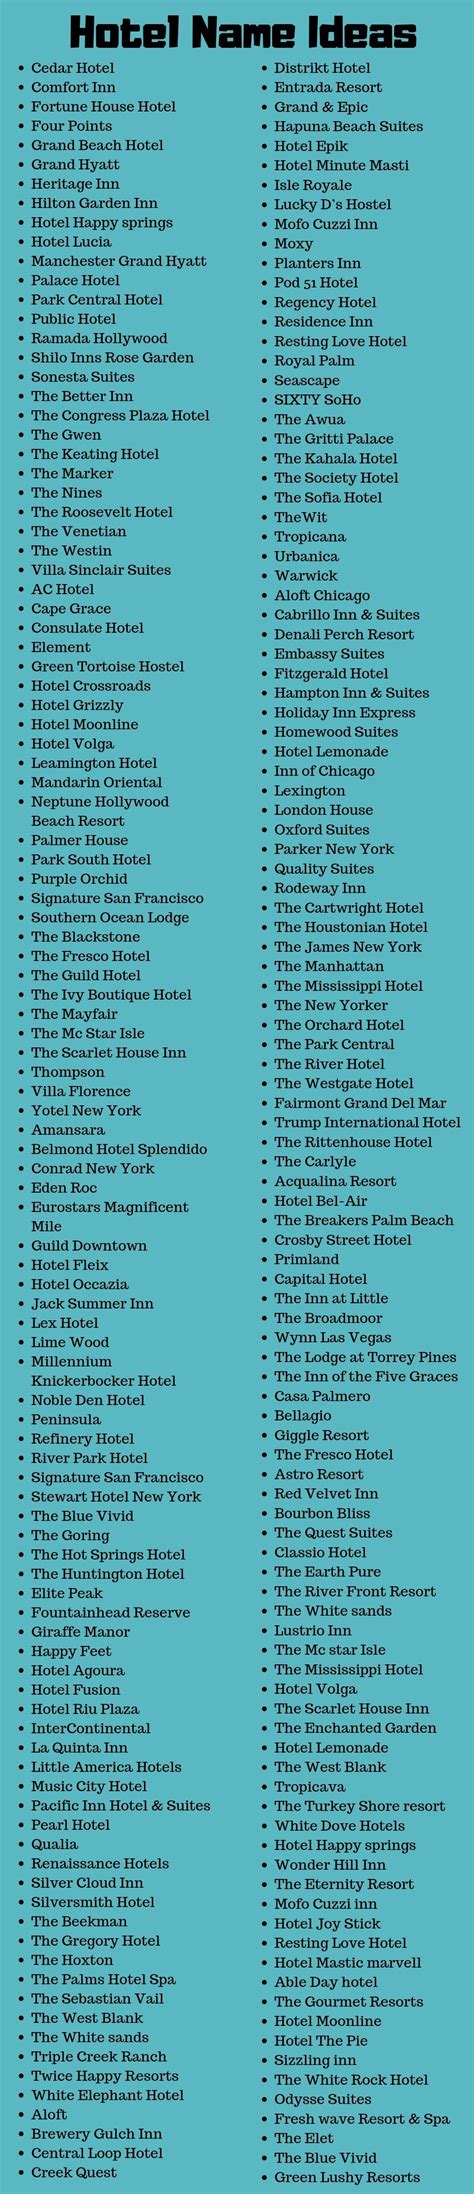 Seasons Restaurant, Restaurant Names, Hotel Restaurant, Restaurant Design, Names Of Hotels ...